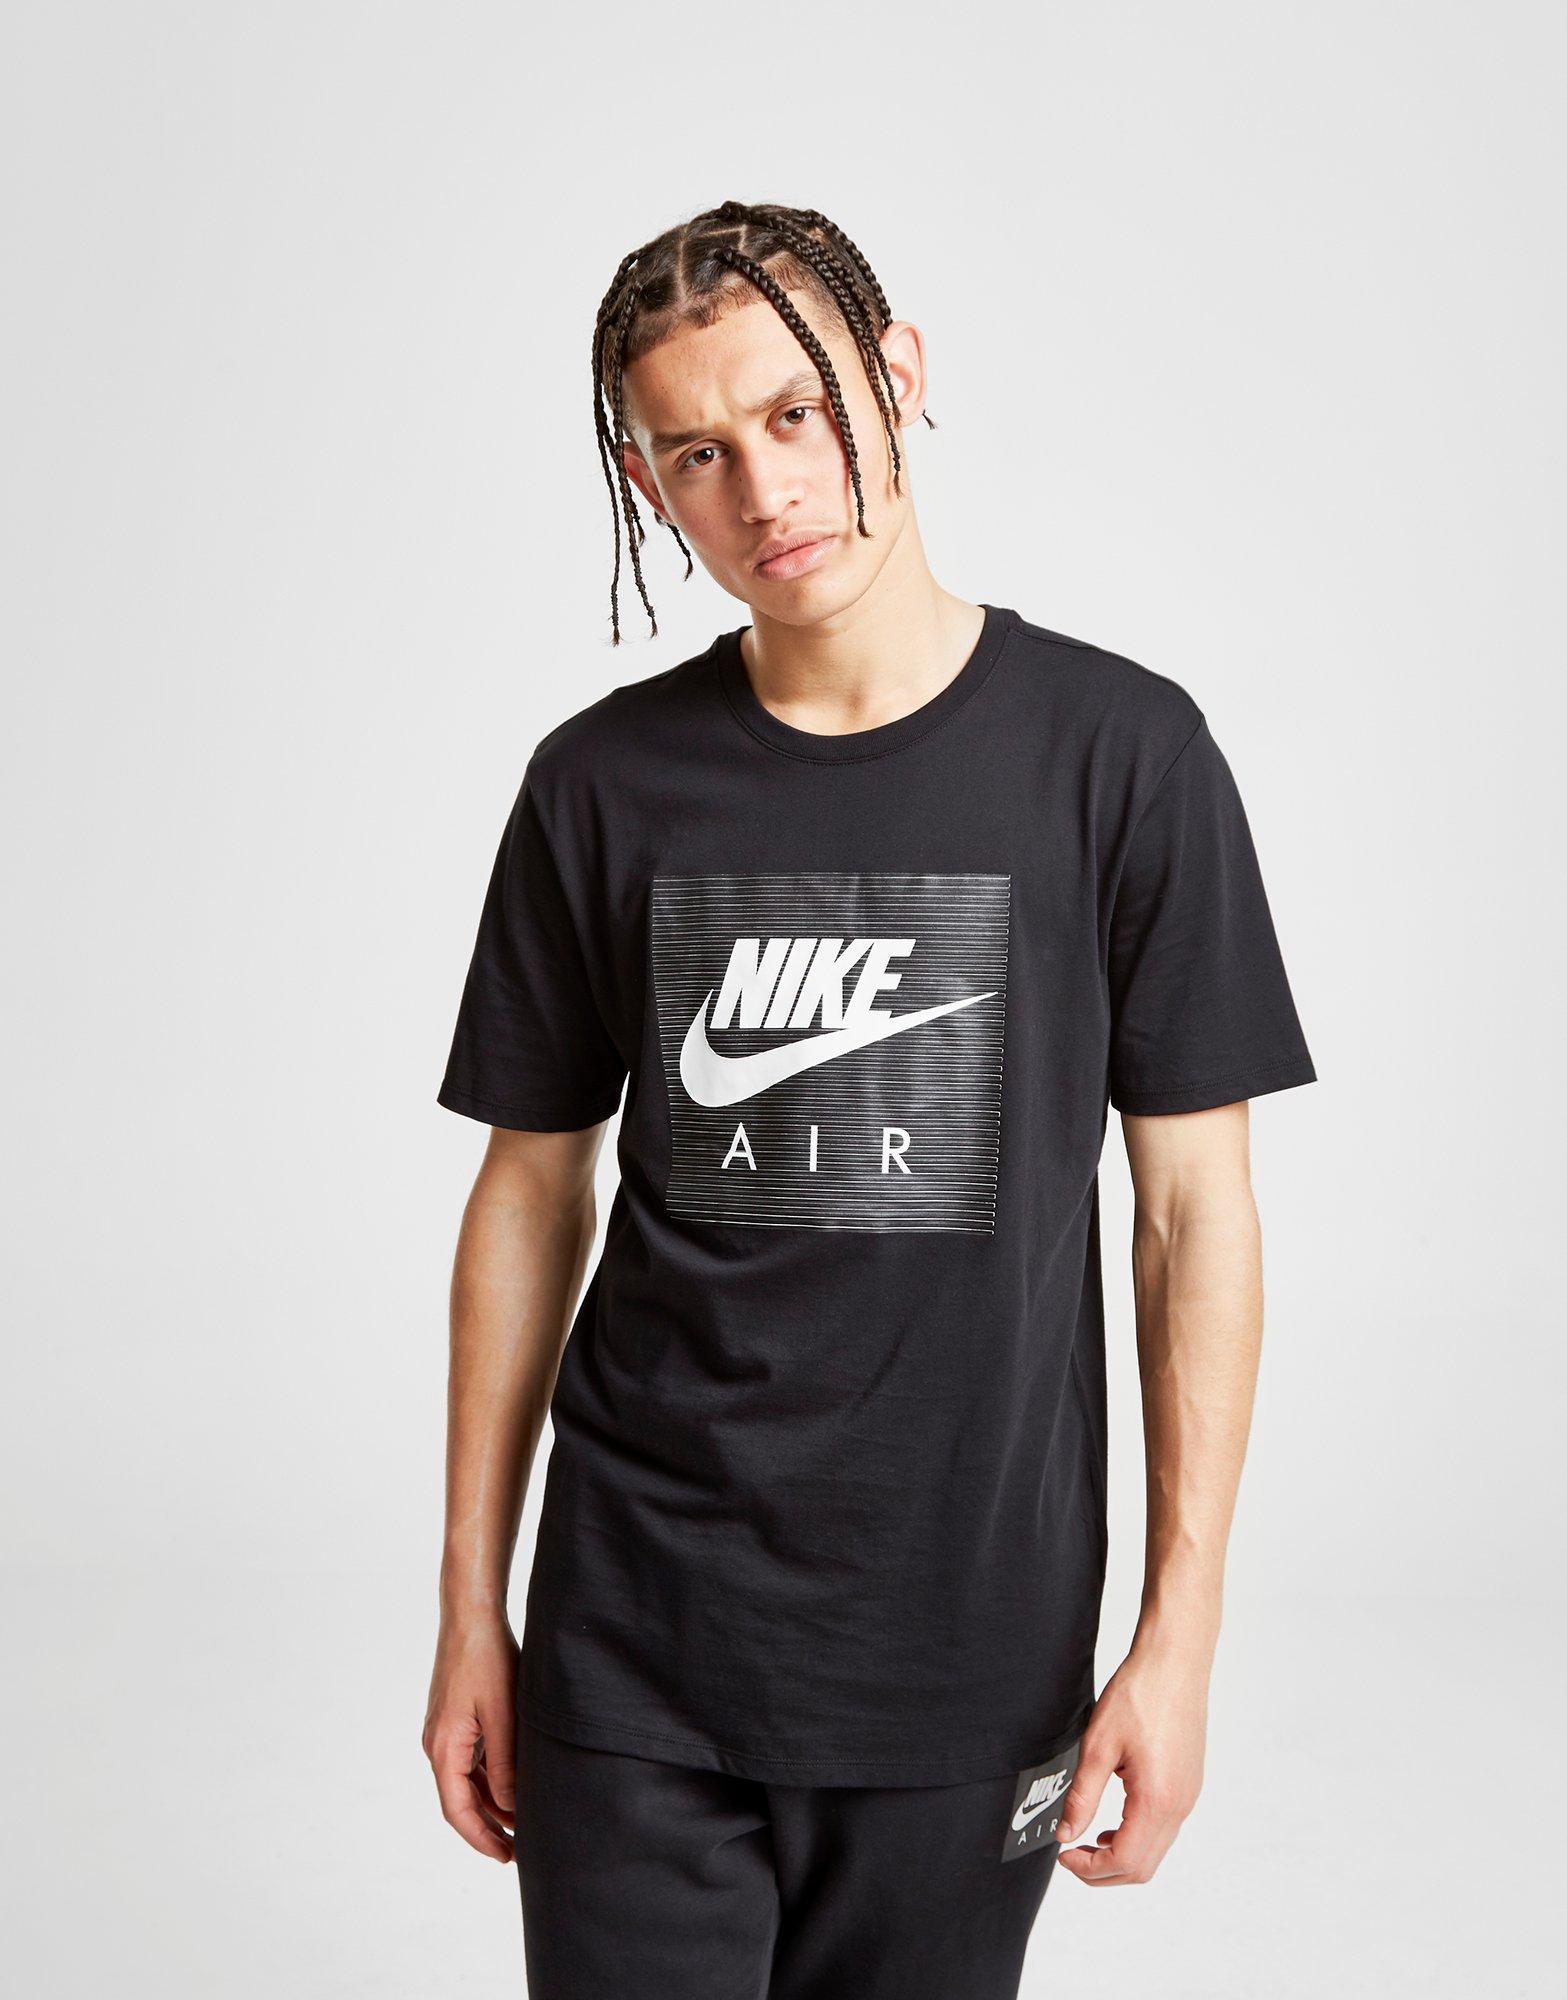 Nike Air Box T-shirt in Black for Men - Lyst